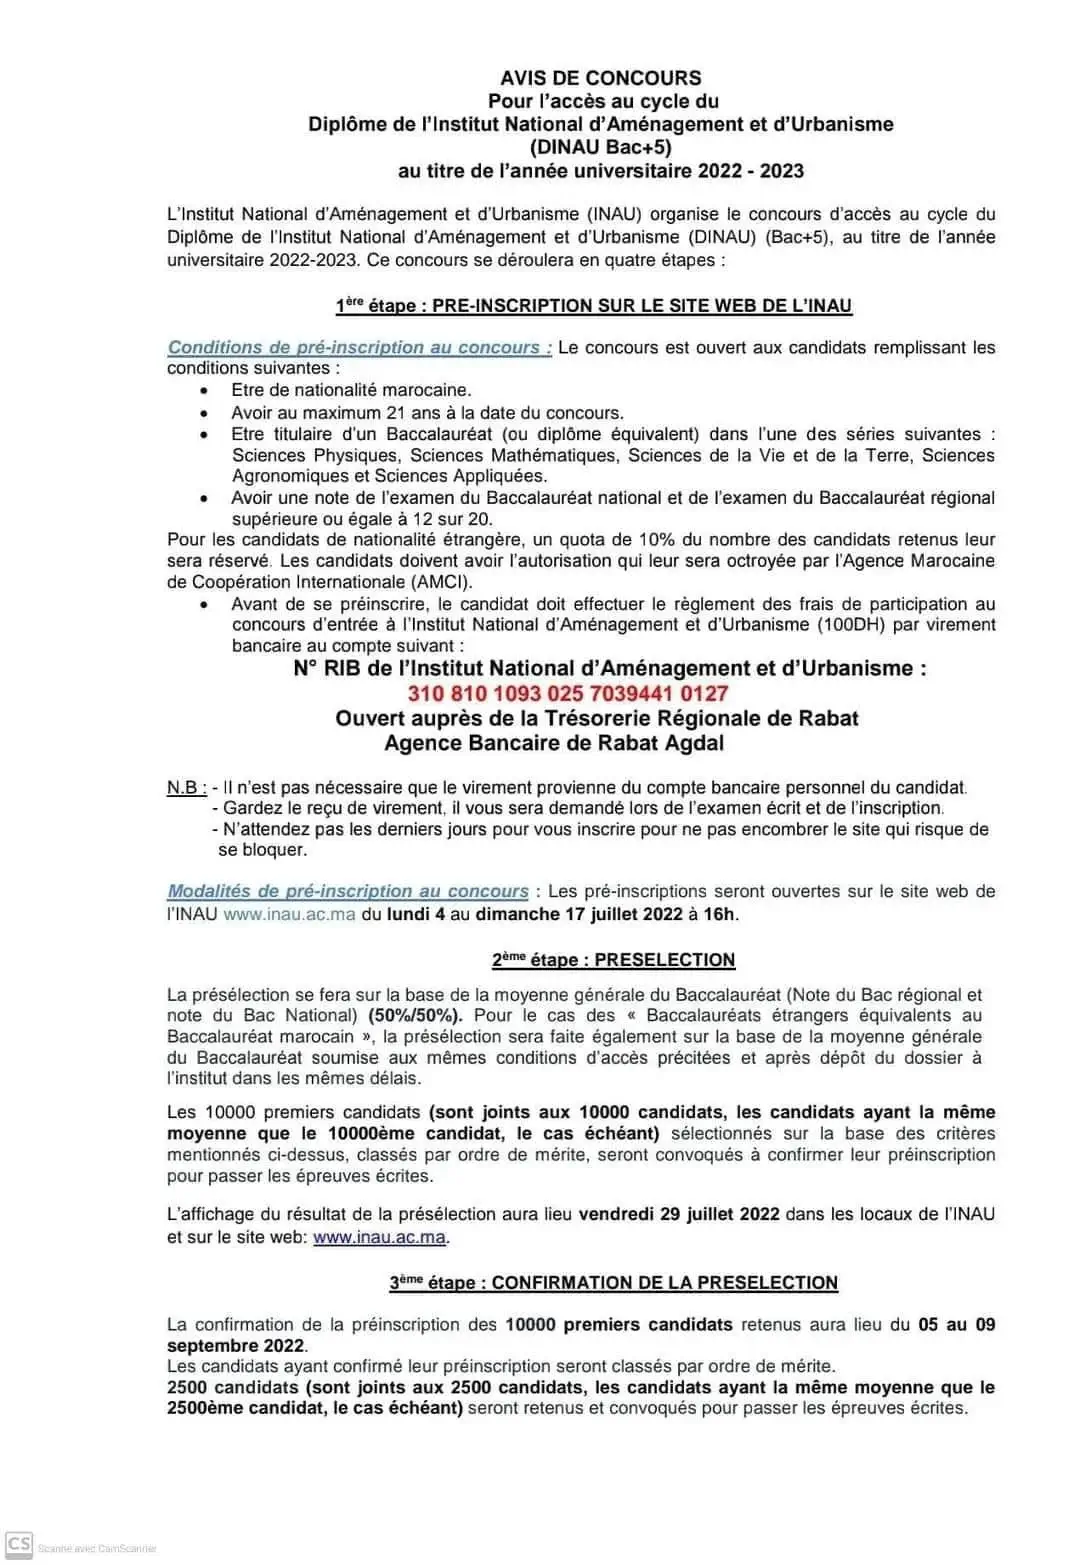 Inscription Concours INAU 2022